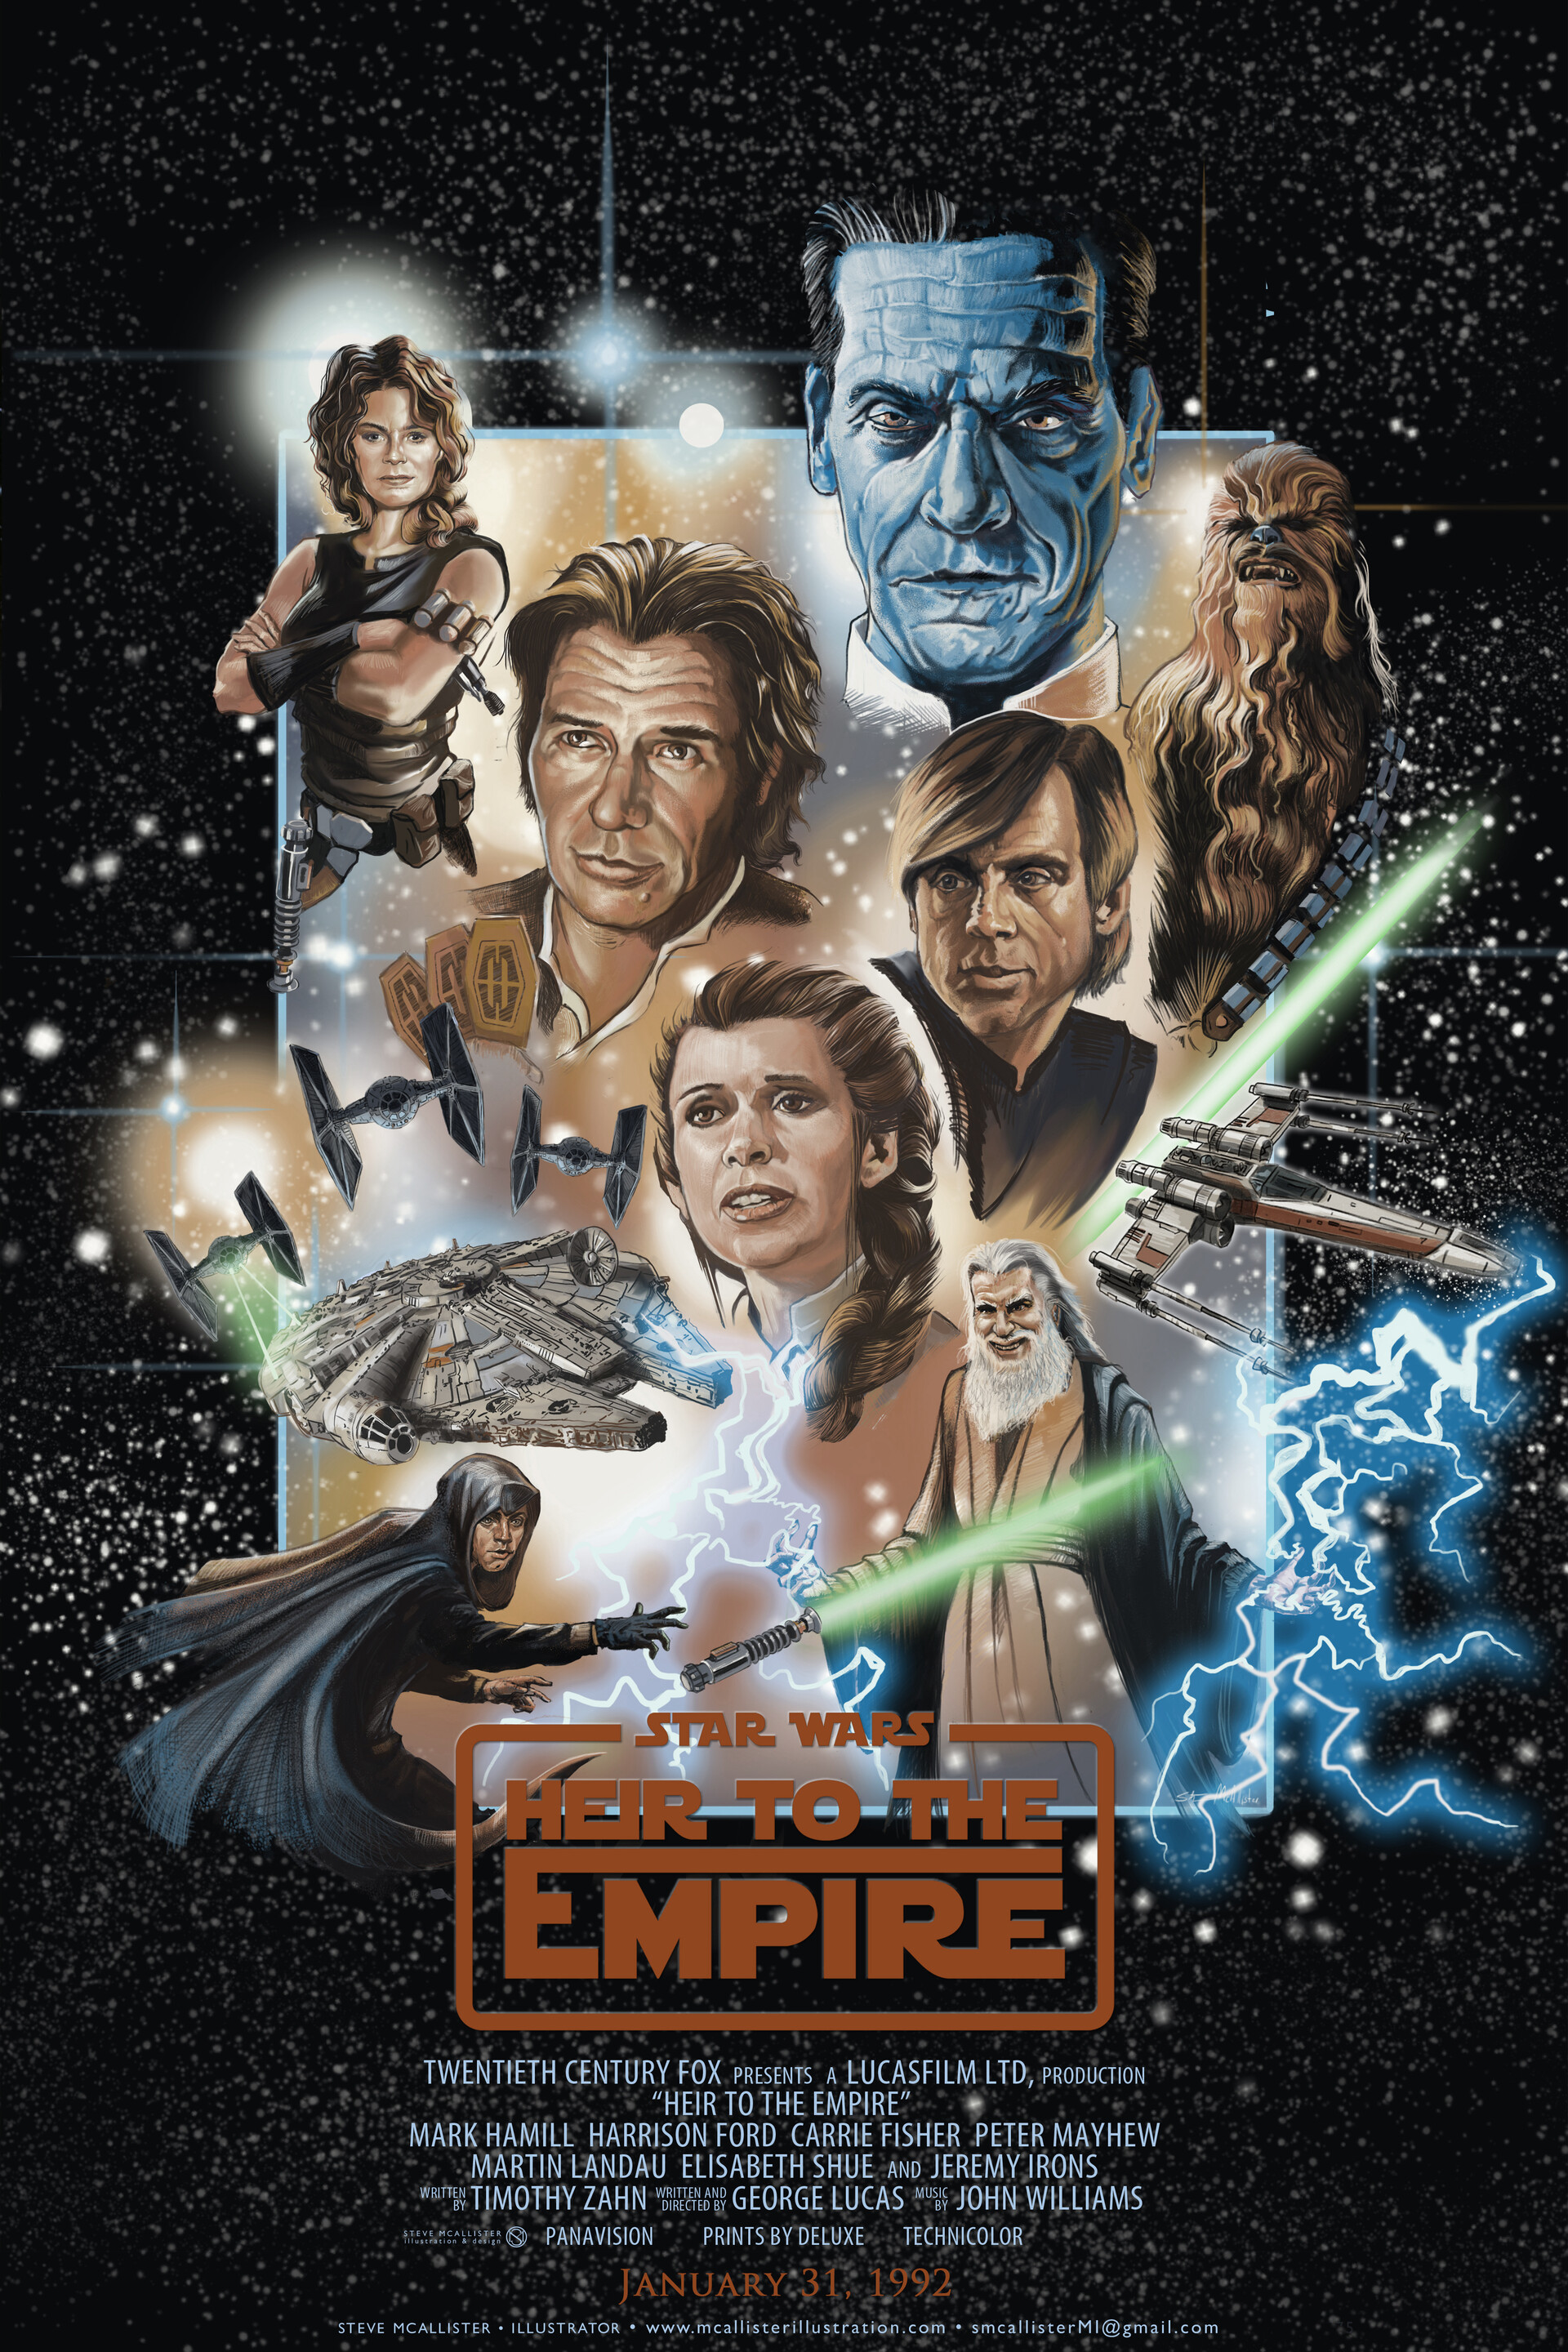 Heir to the Empire, poster, Steve McAllister